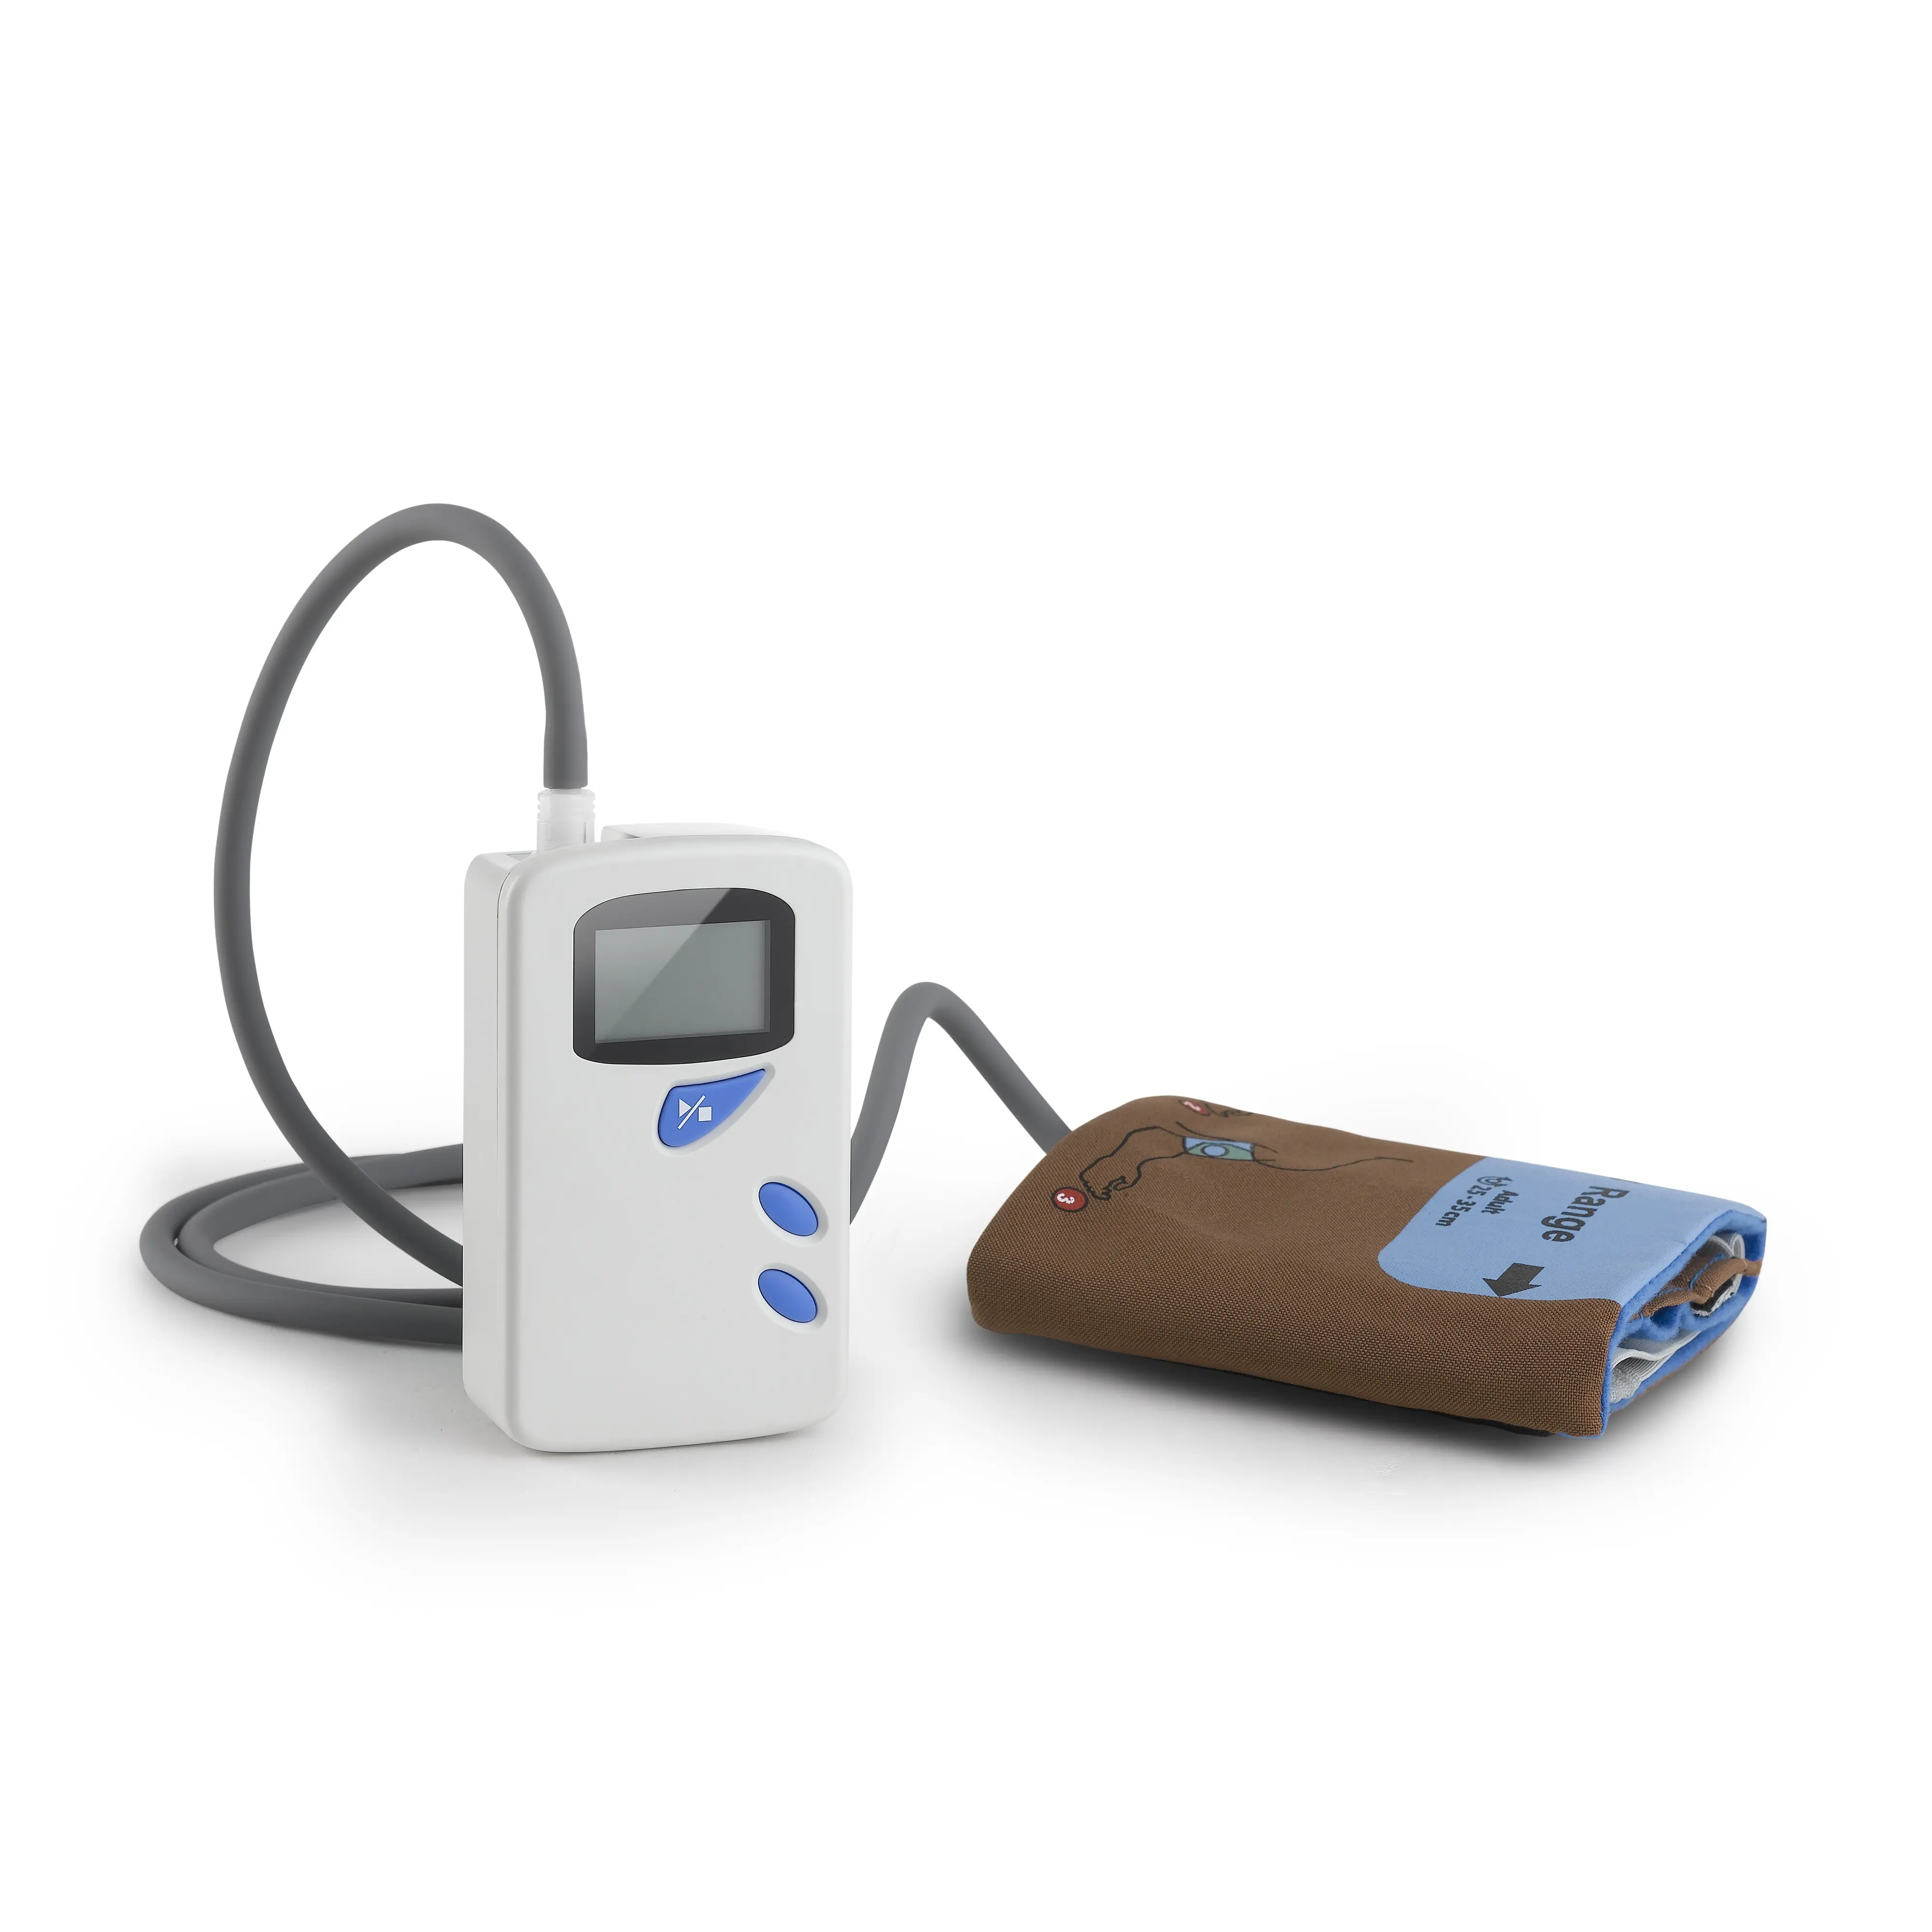 Buy online ABPM 50 24 hours ambulatory blood pressure monitor